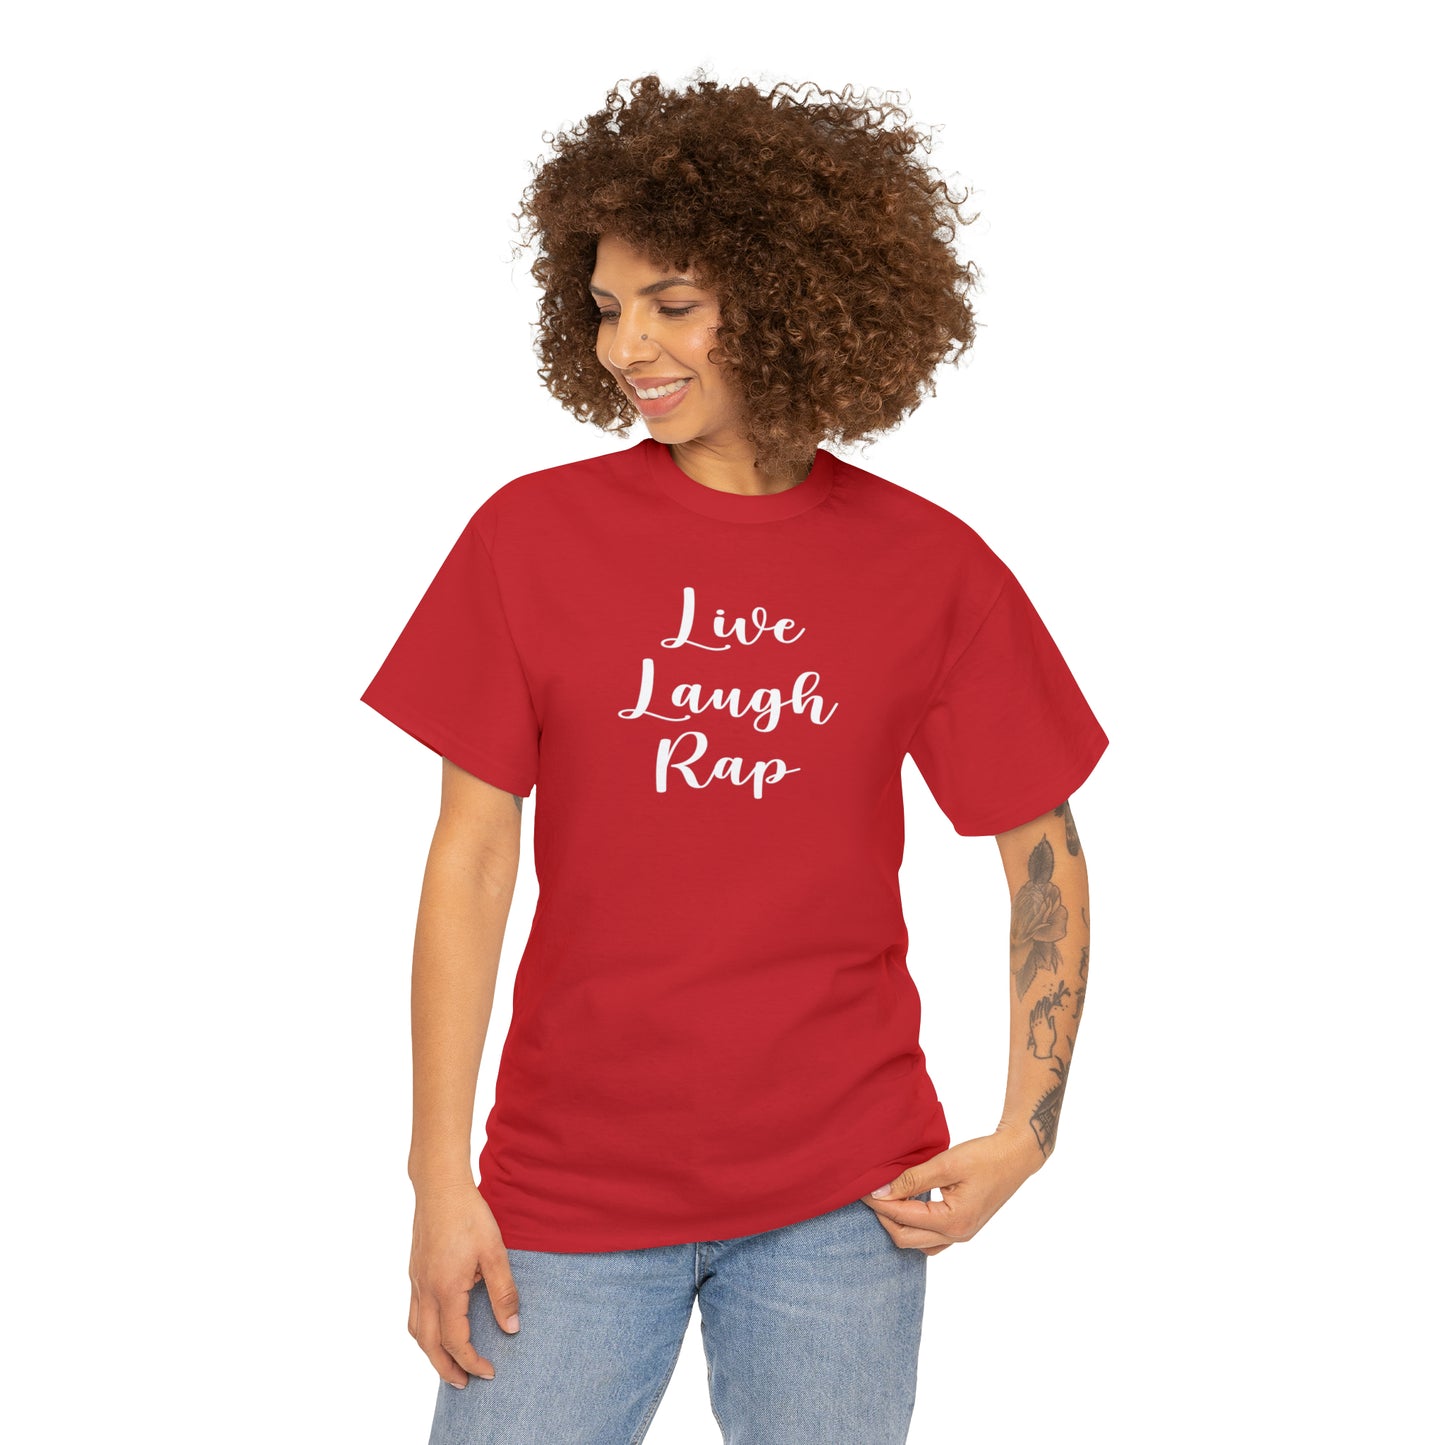 Live Laugh Rap Hip-Hop Shirt Great gift for a Hip-Hop & Rap Lover T-Shirt, Rap T-Shirt